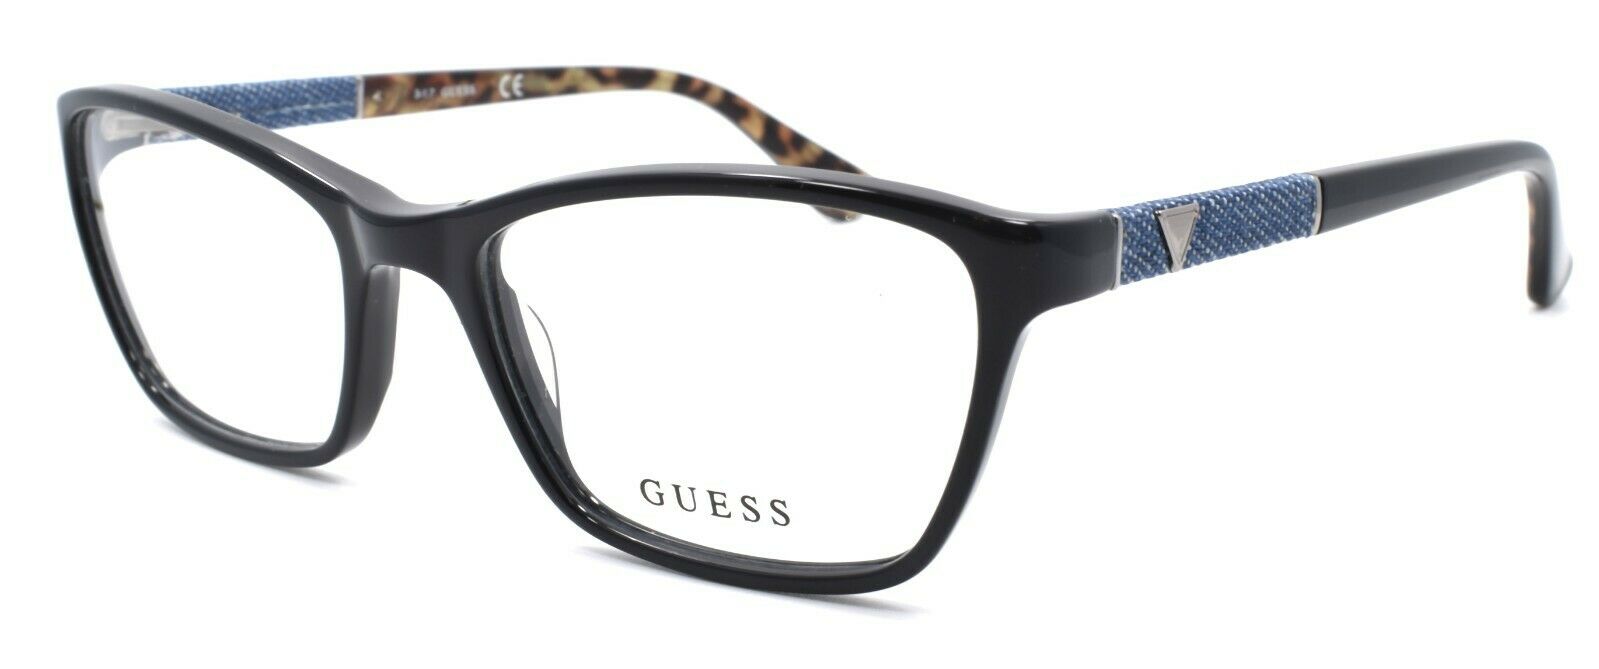 1-GUESS GU2594 001 Women's Eyeglasses Frames 52-17-135 Black / Denim + CASE-664689837199-IKSpecs